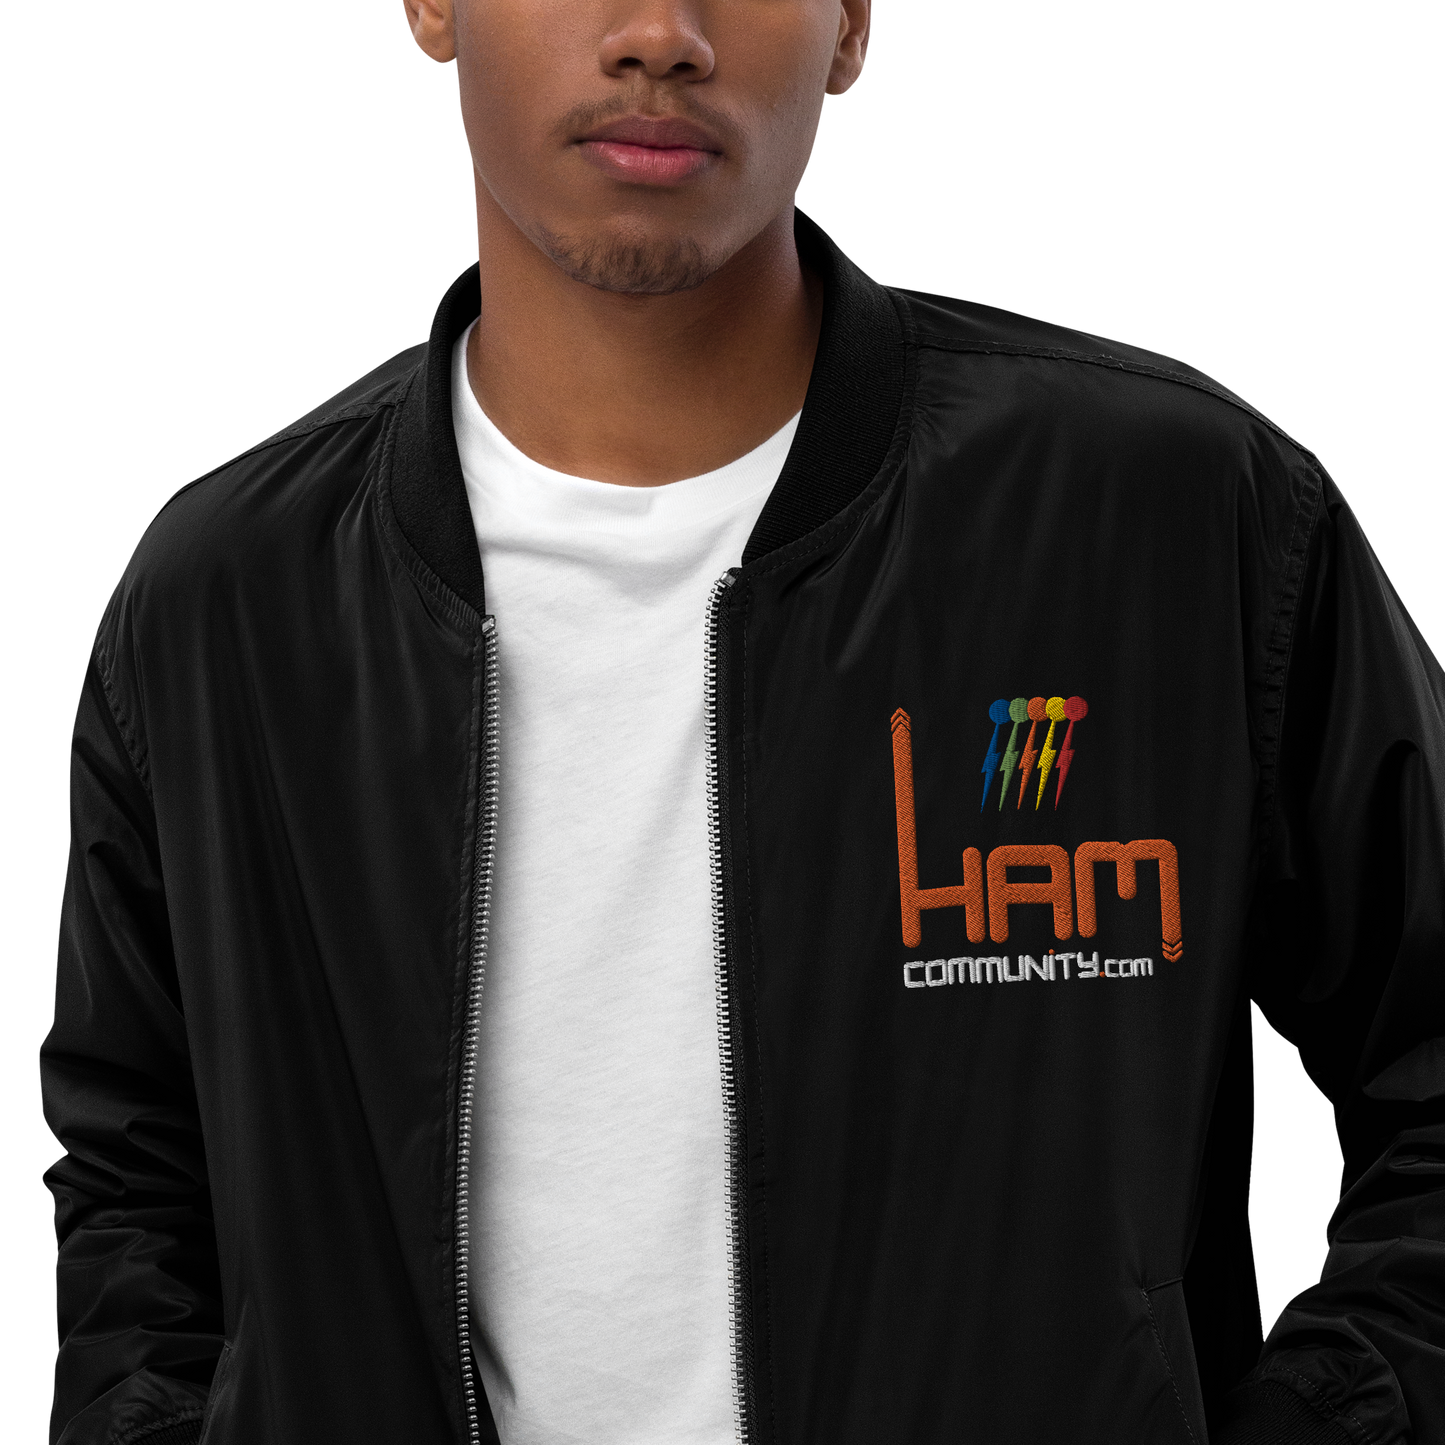 Ham Community Premium recycled bomber jacket